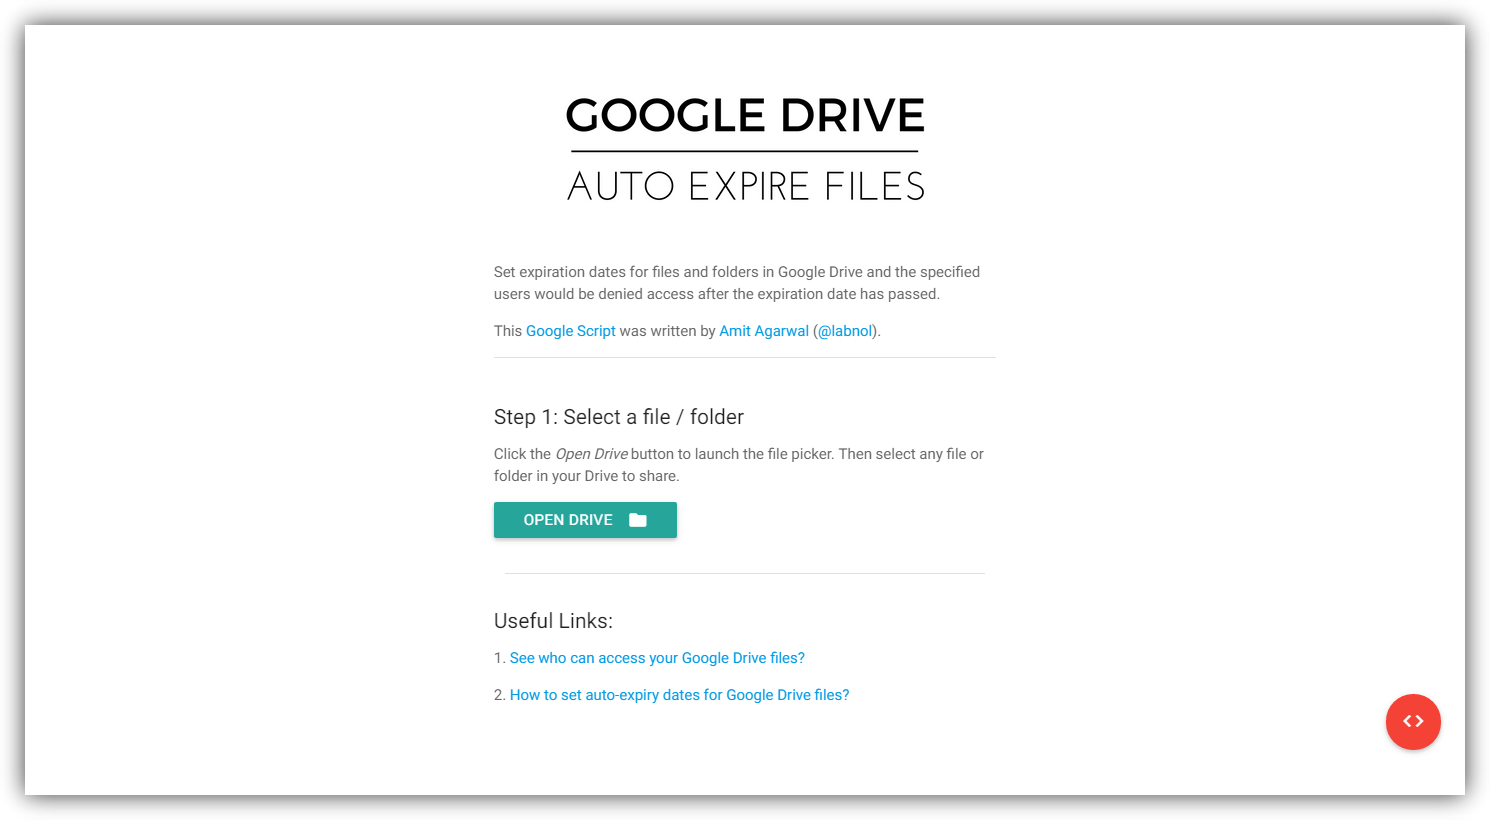 Google Drive Auto Expire Files